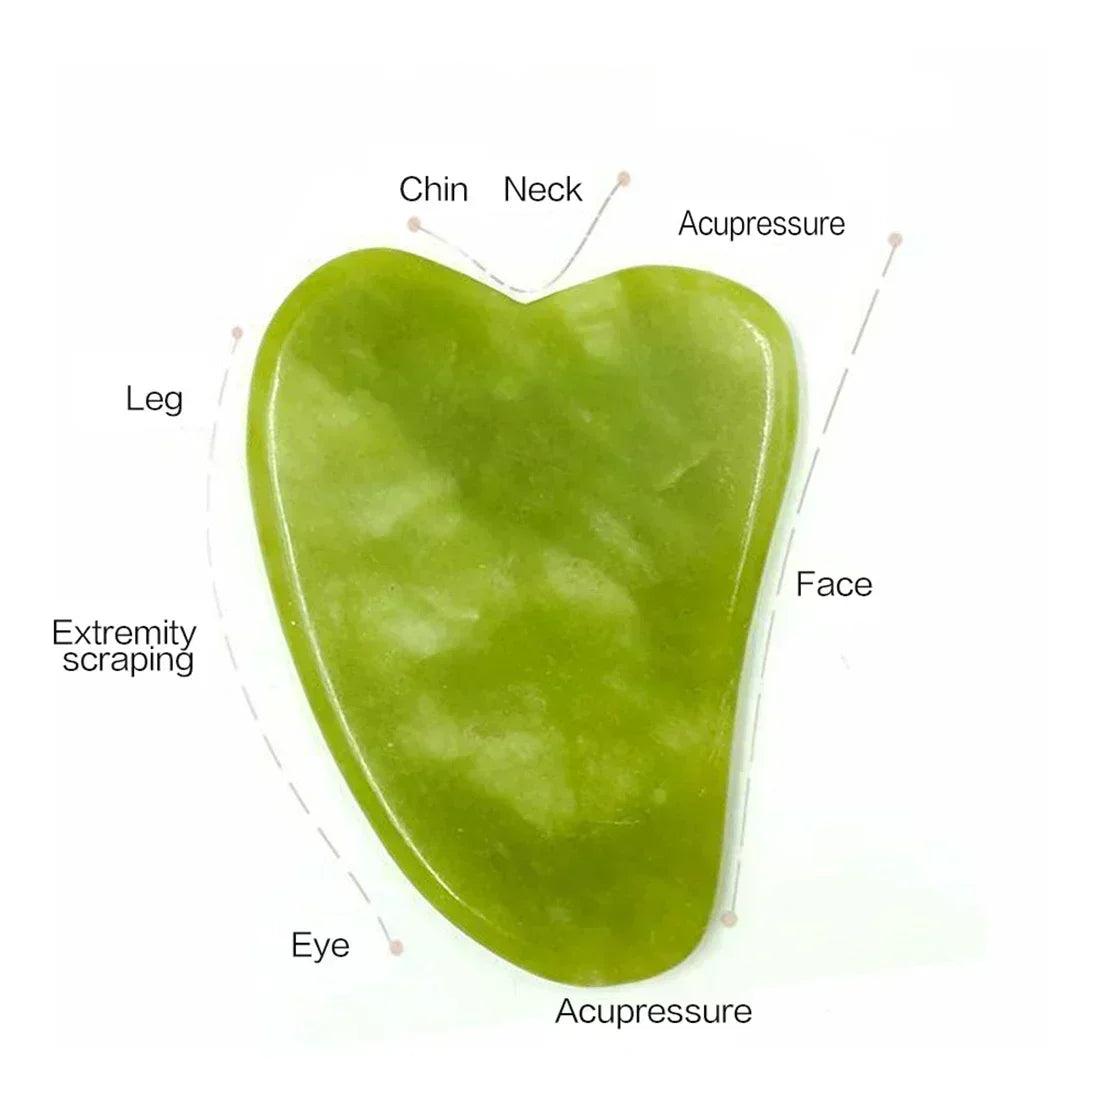 Jade Stone Facial Massager Kit with Gua Sha Scraper - Skin Rejuvenation and Relaxation Tool  ourlum.com   